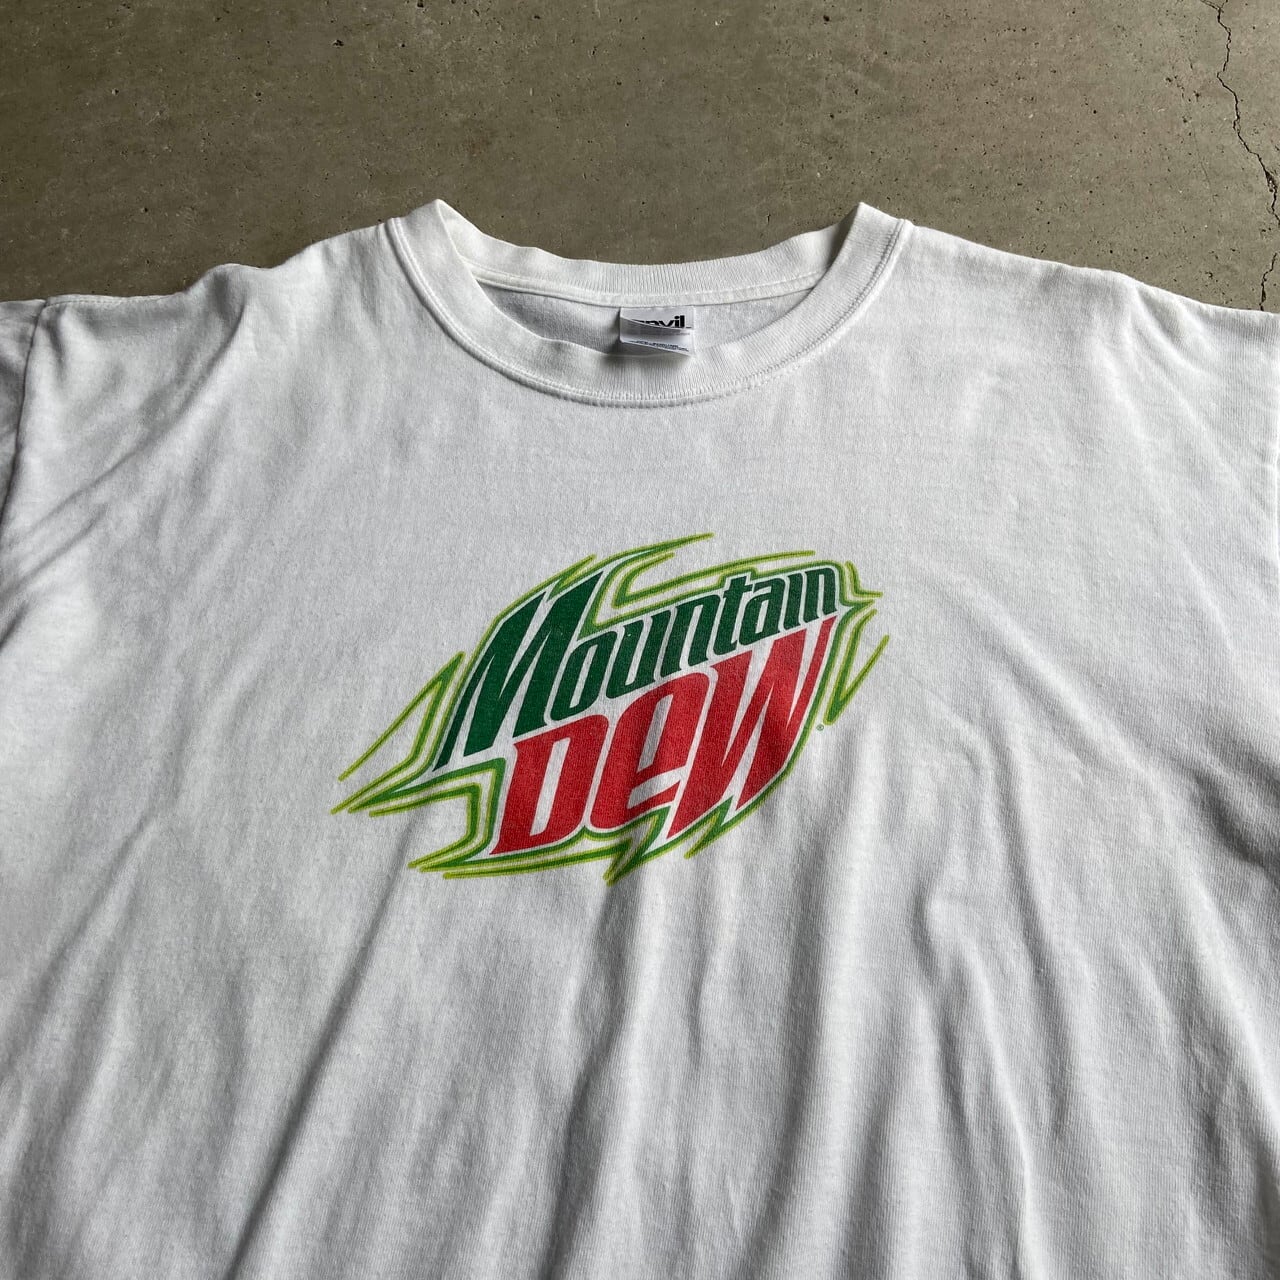 MOUNTAIN DEW 企業ロゴ プリントTシャツ ビッグサイズ